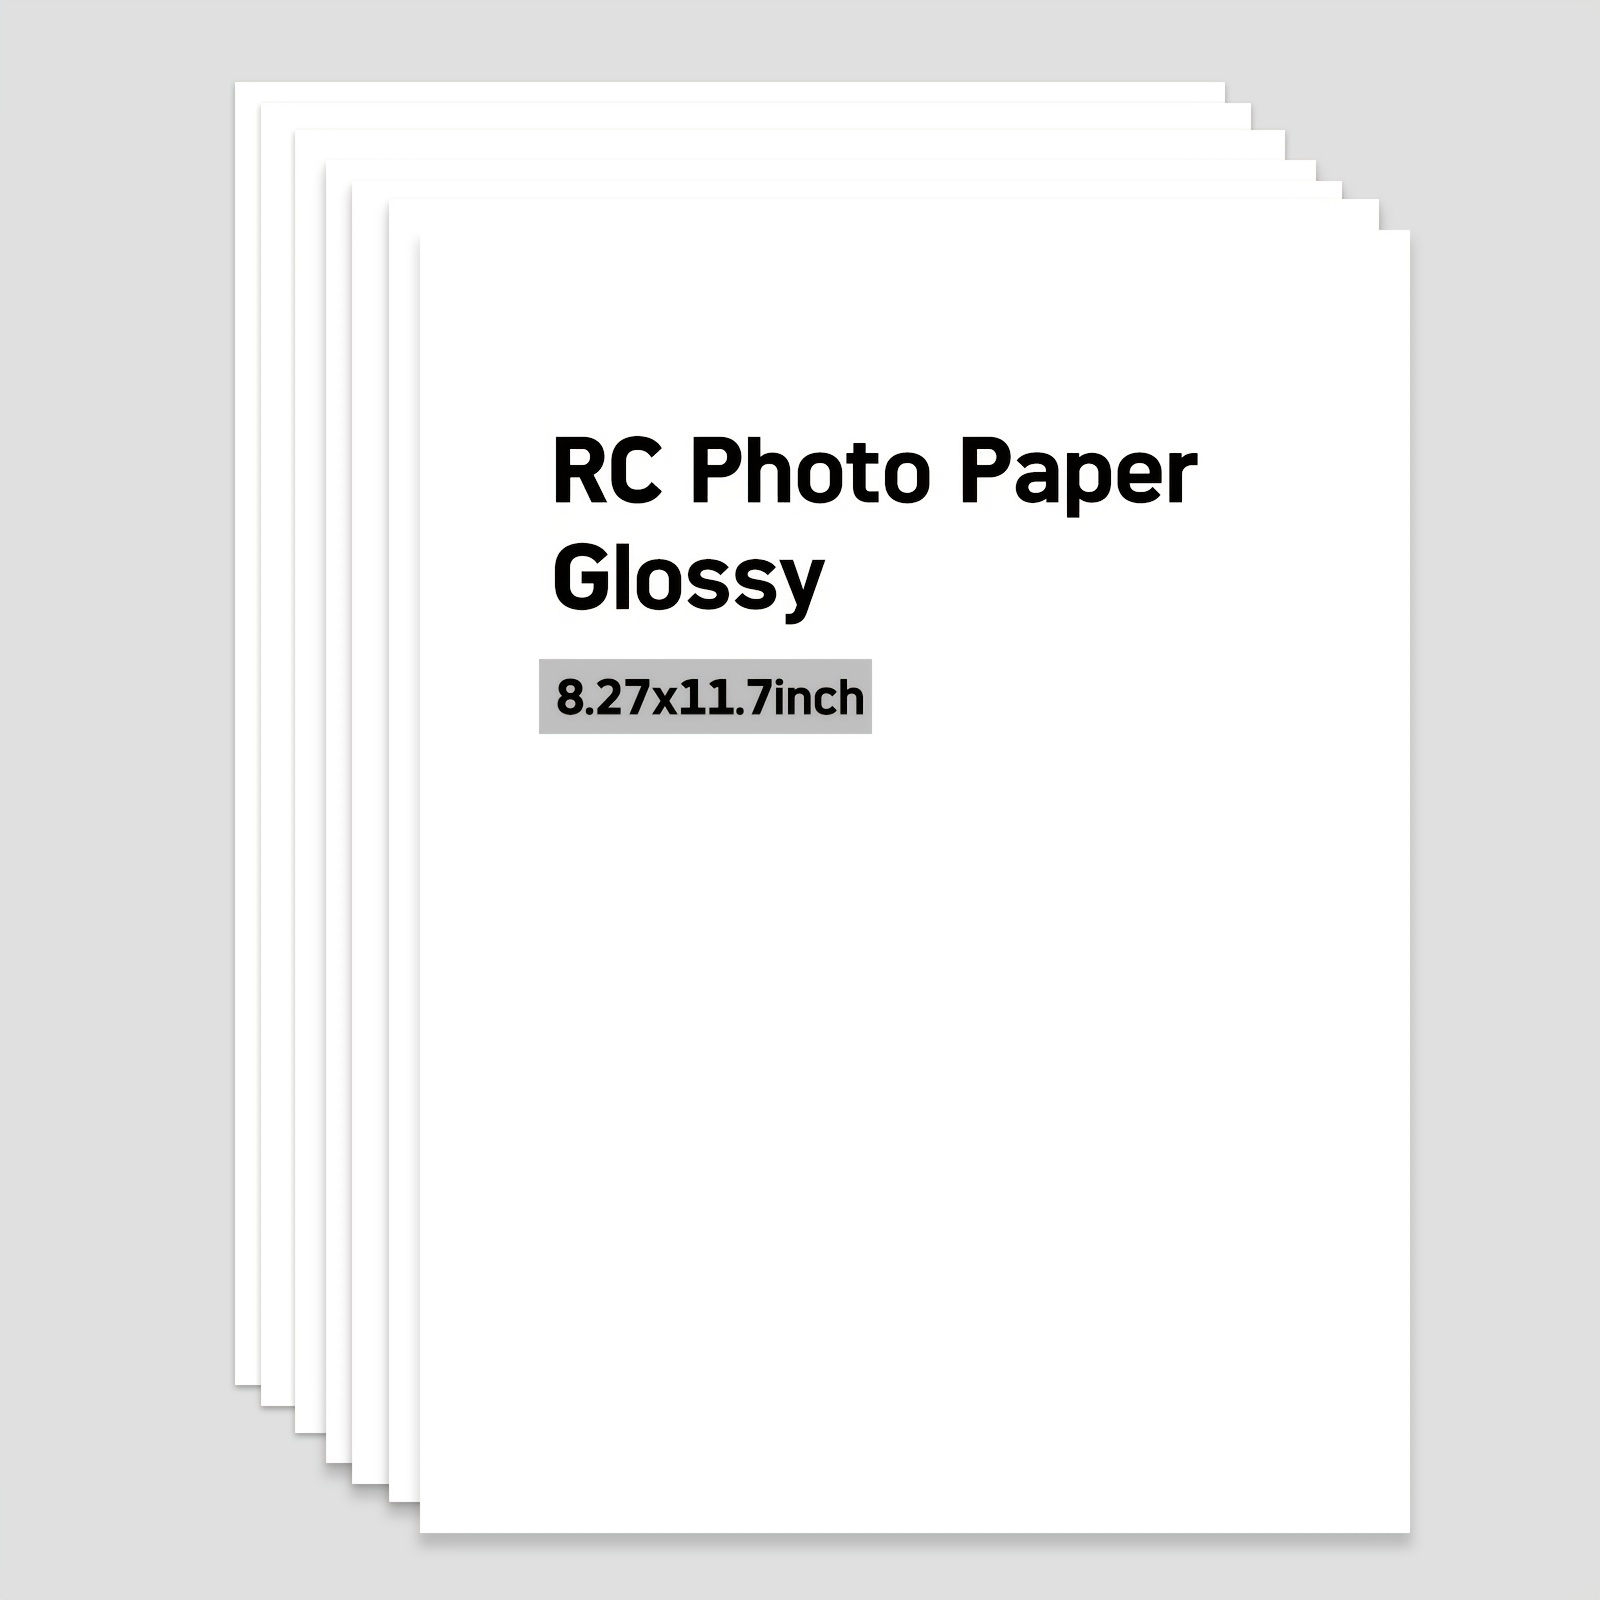 RC Photo Paper